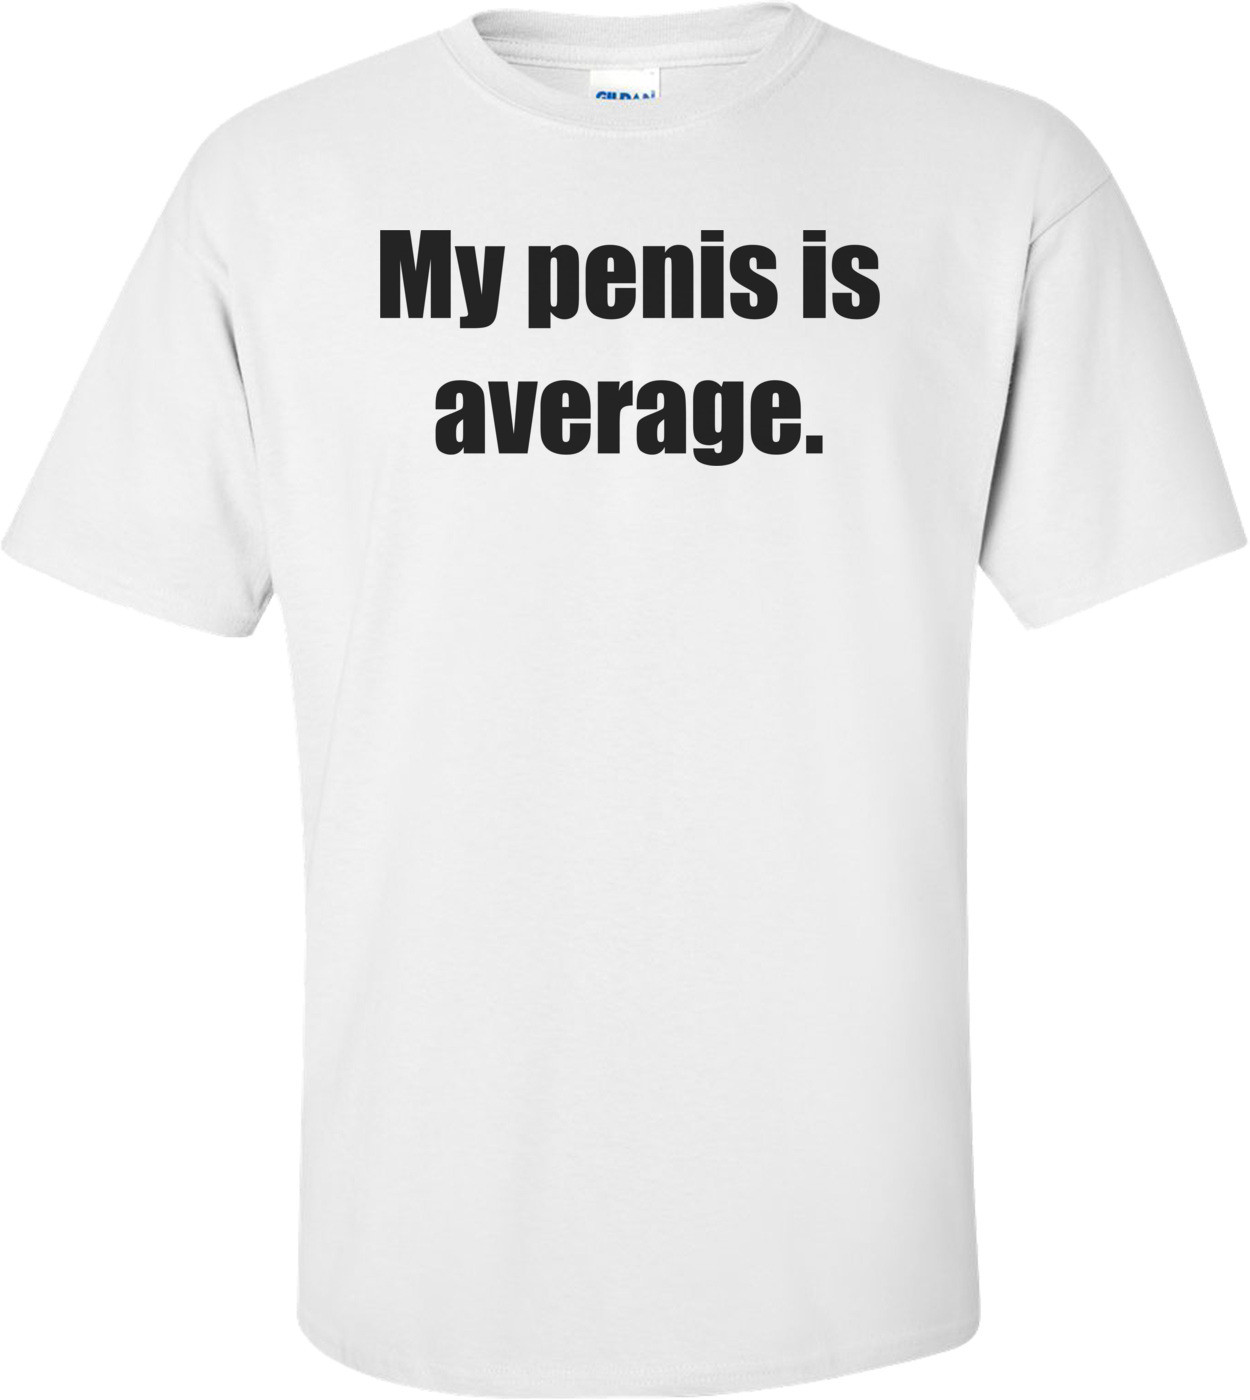 My penis is average. Shirt